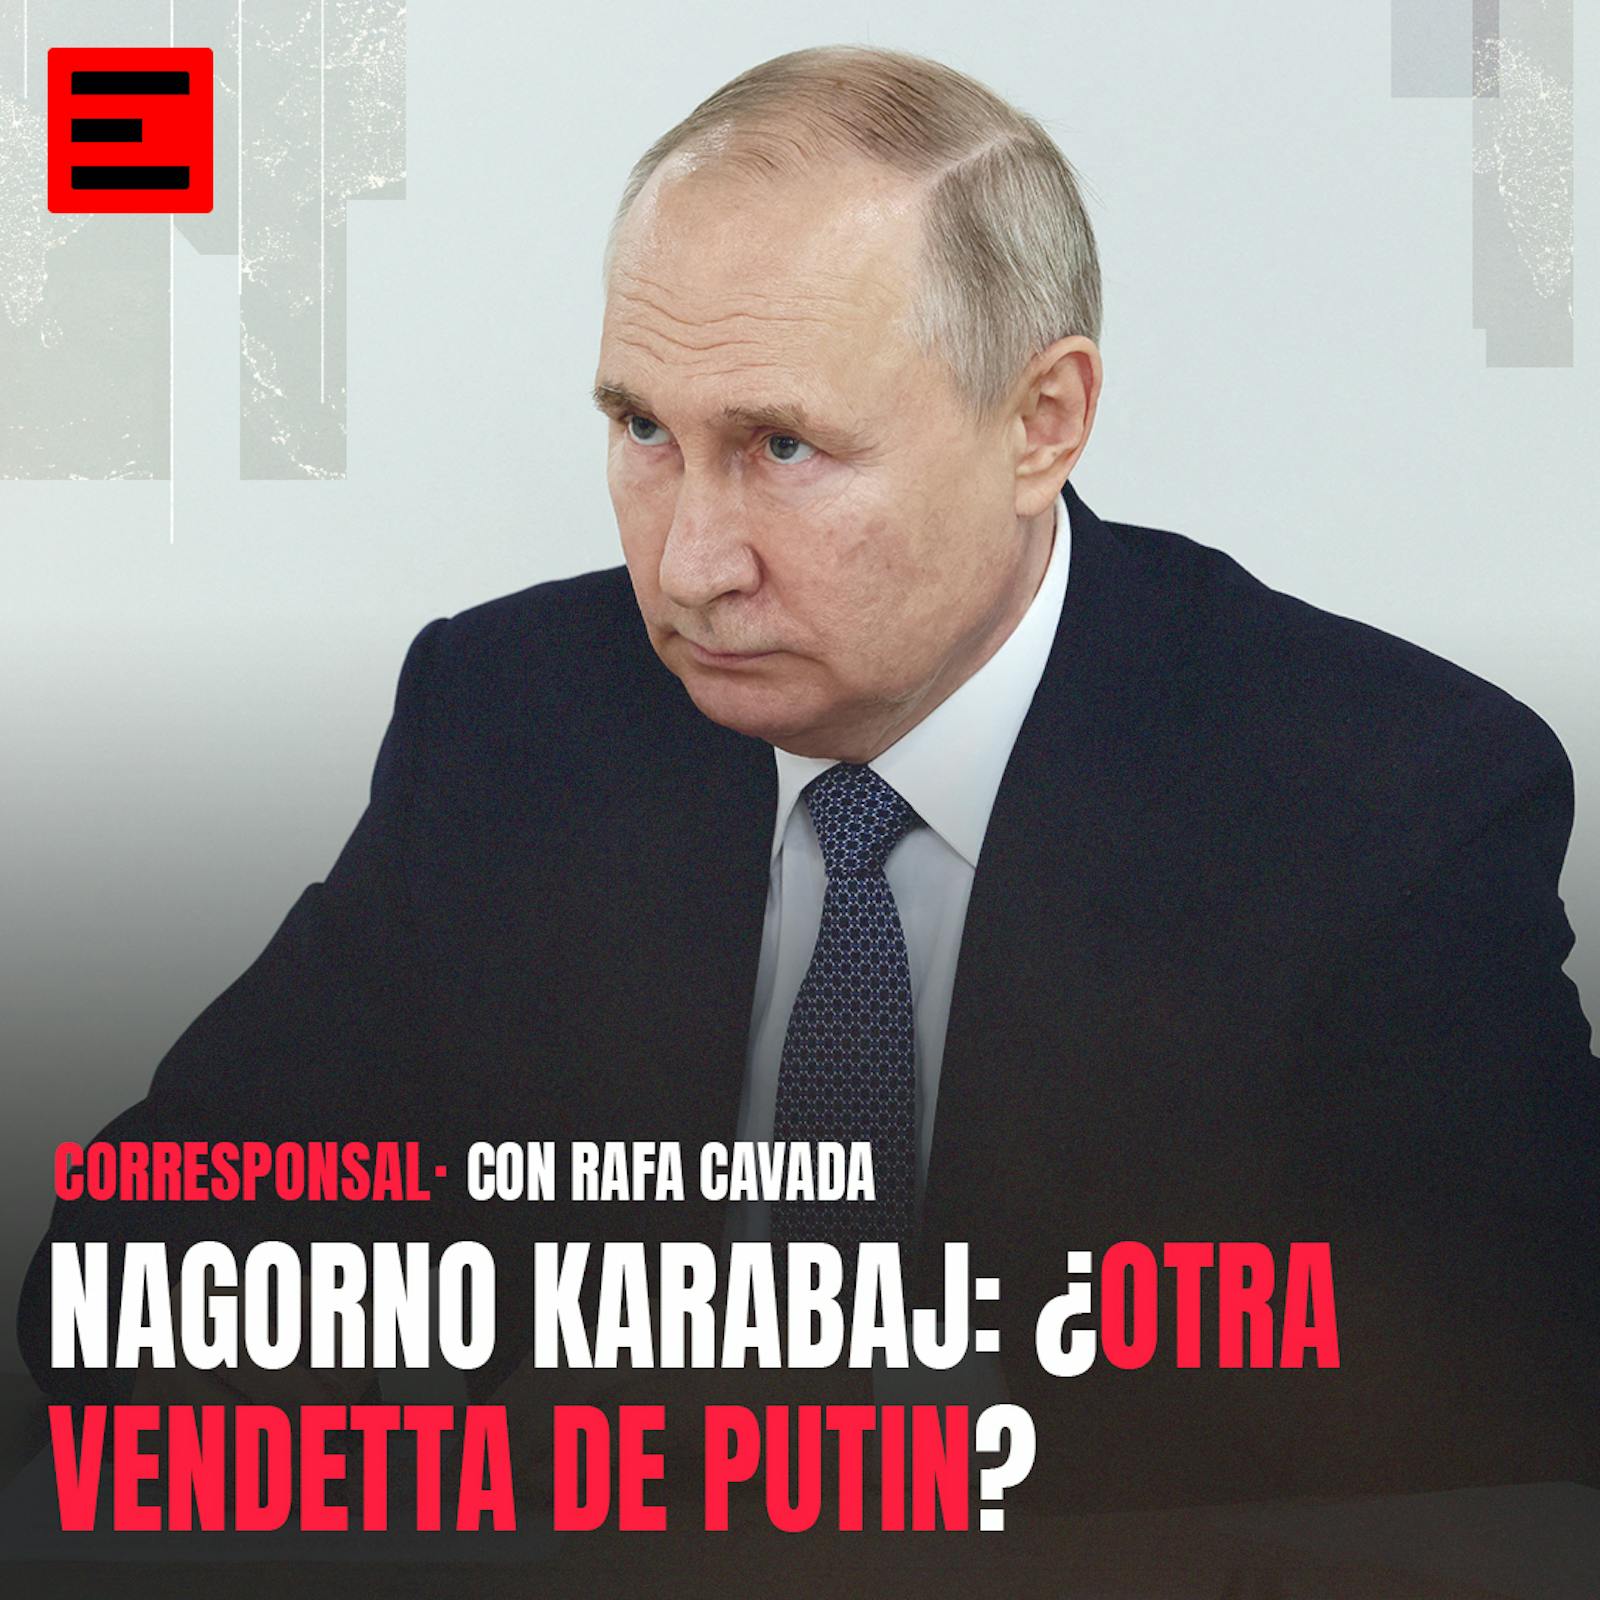 Nagorno Karabaj: ¿Otra vendetta de Putin?